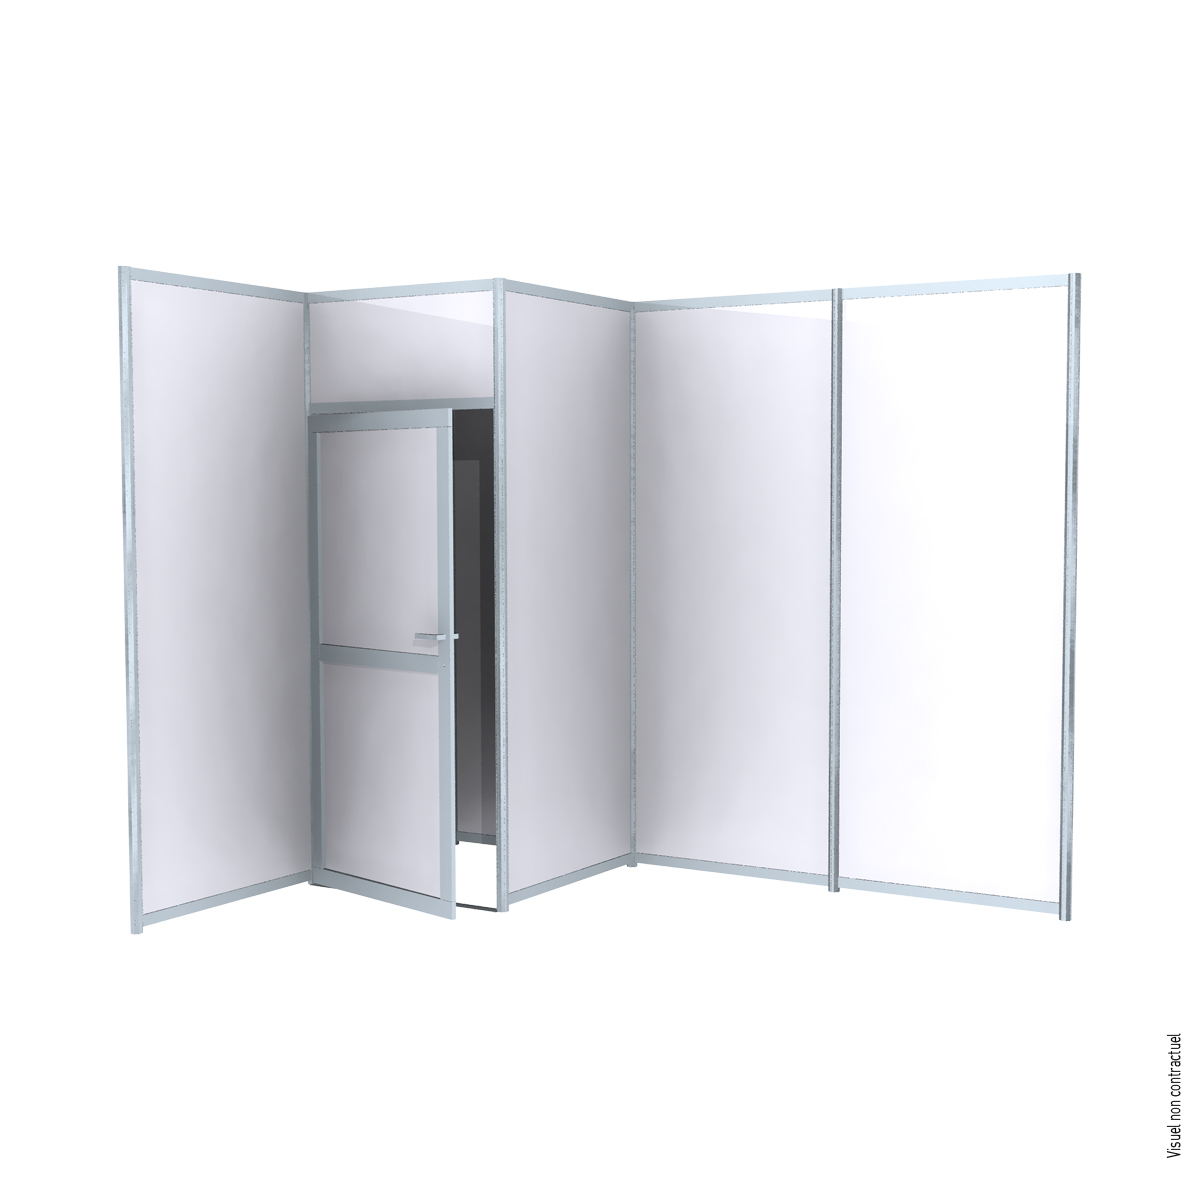 Aluminum frame corner storage cabinet with melamine infill - White